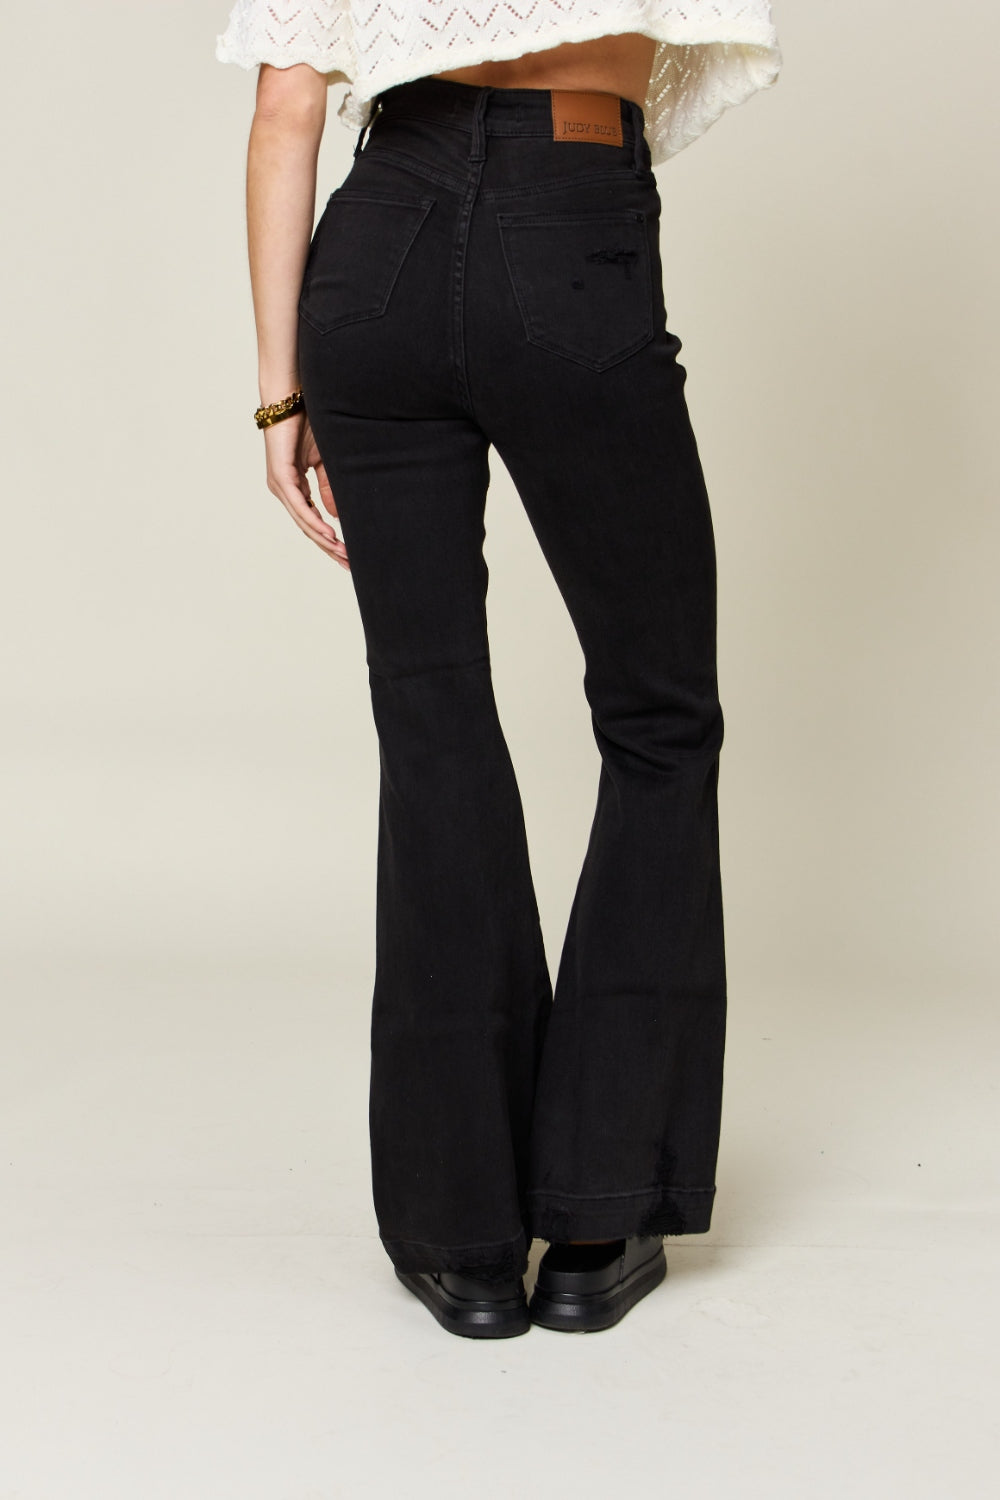 Judy Blue Black High Waist Distressed Flare Jeans Trendsi